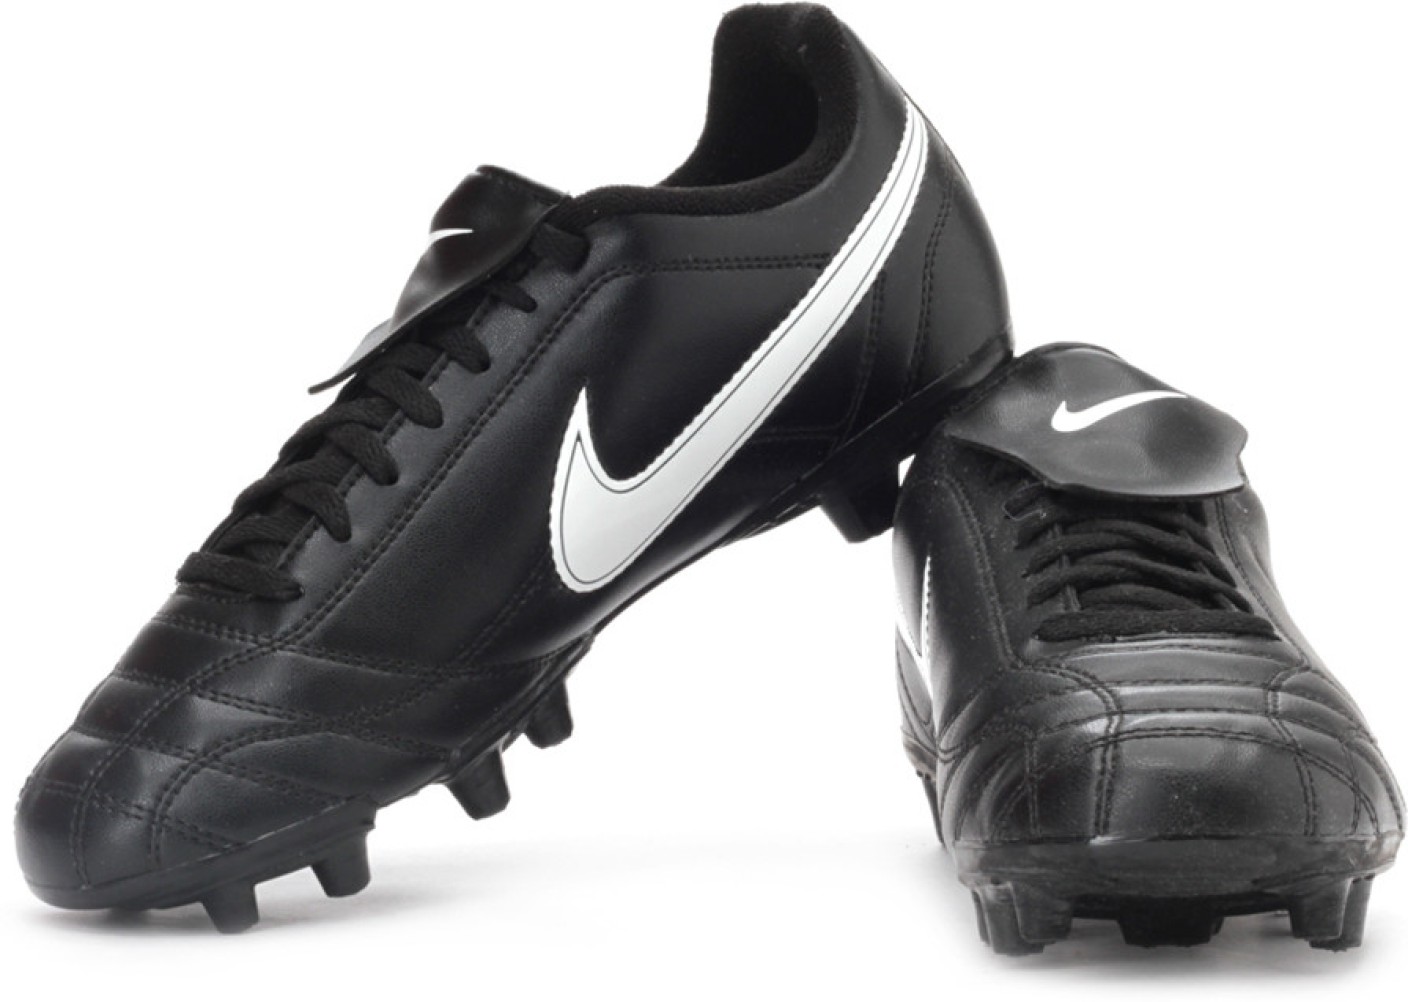 Nike Egoli Fg Football Shoes For Men - Buy Black Color Nike Egoli Fg ...